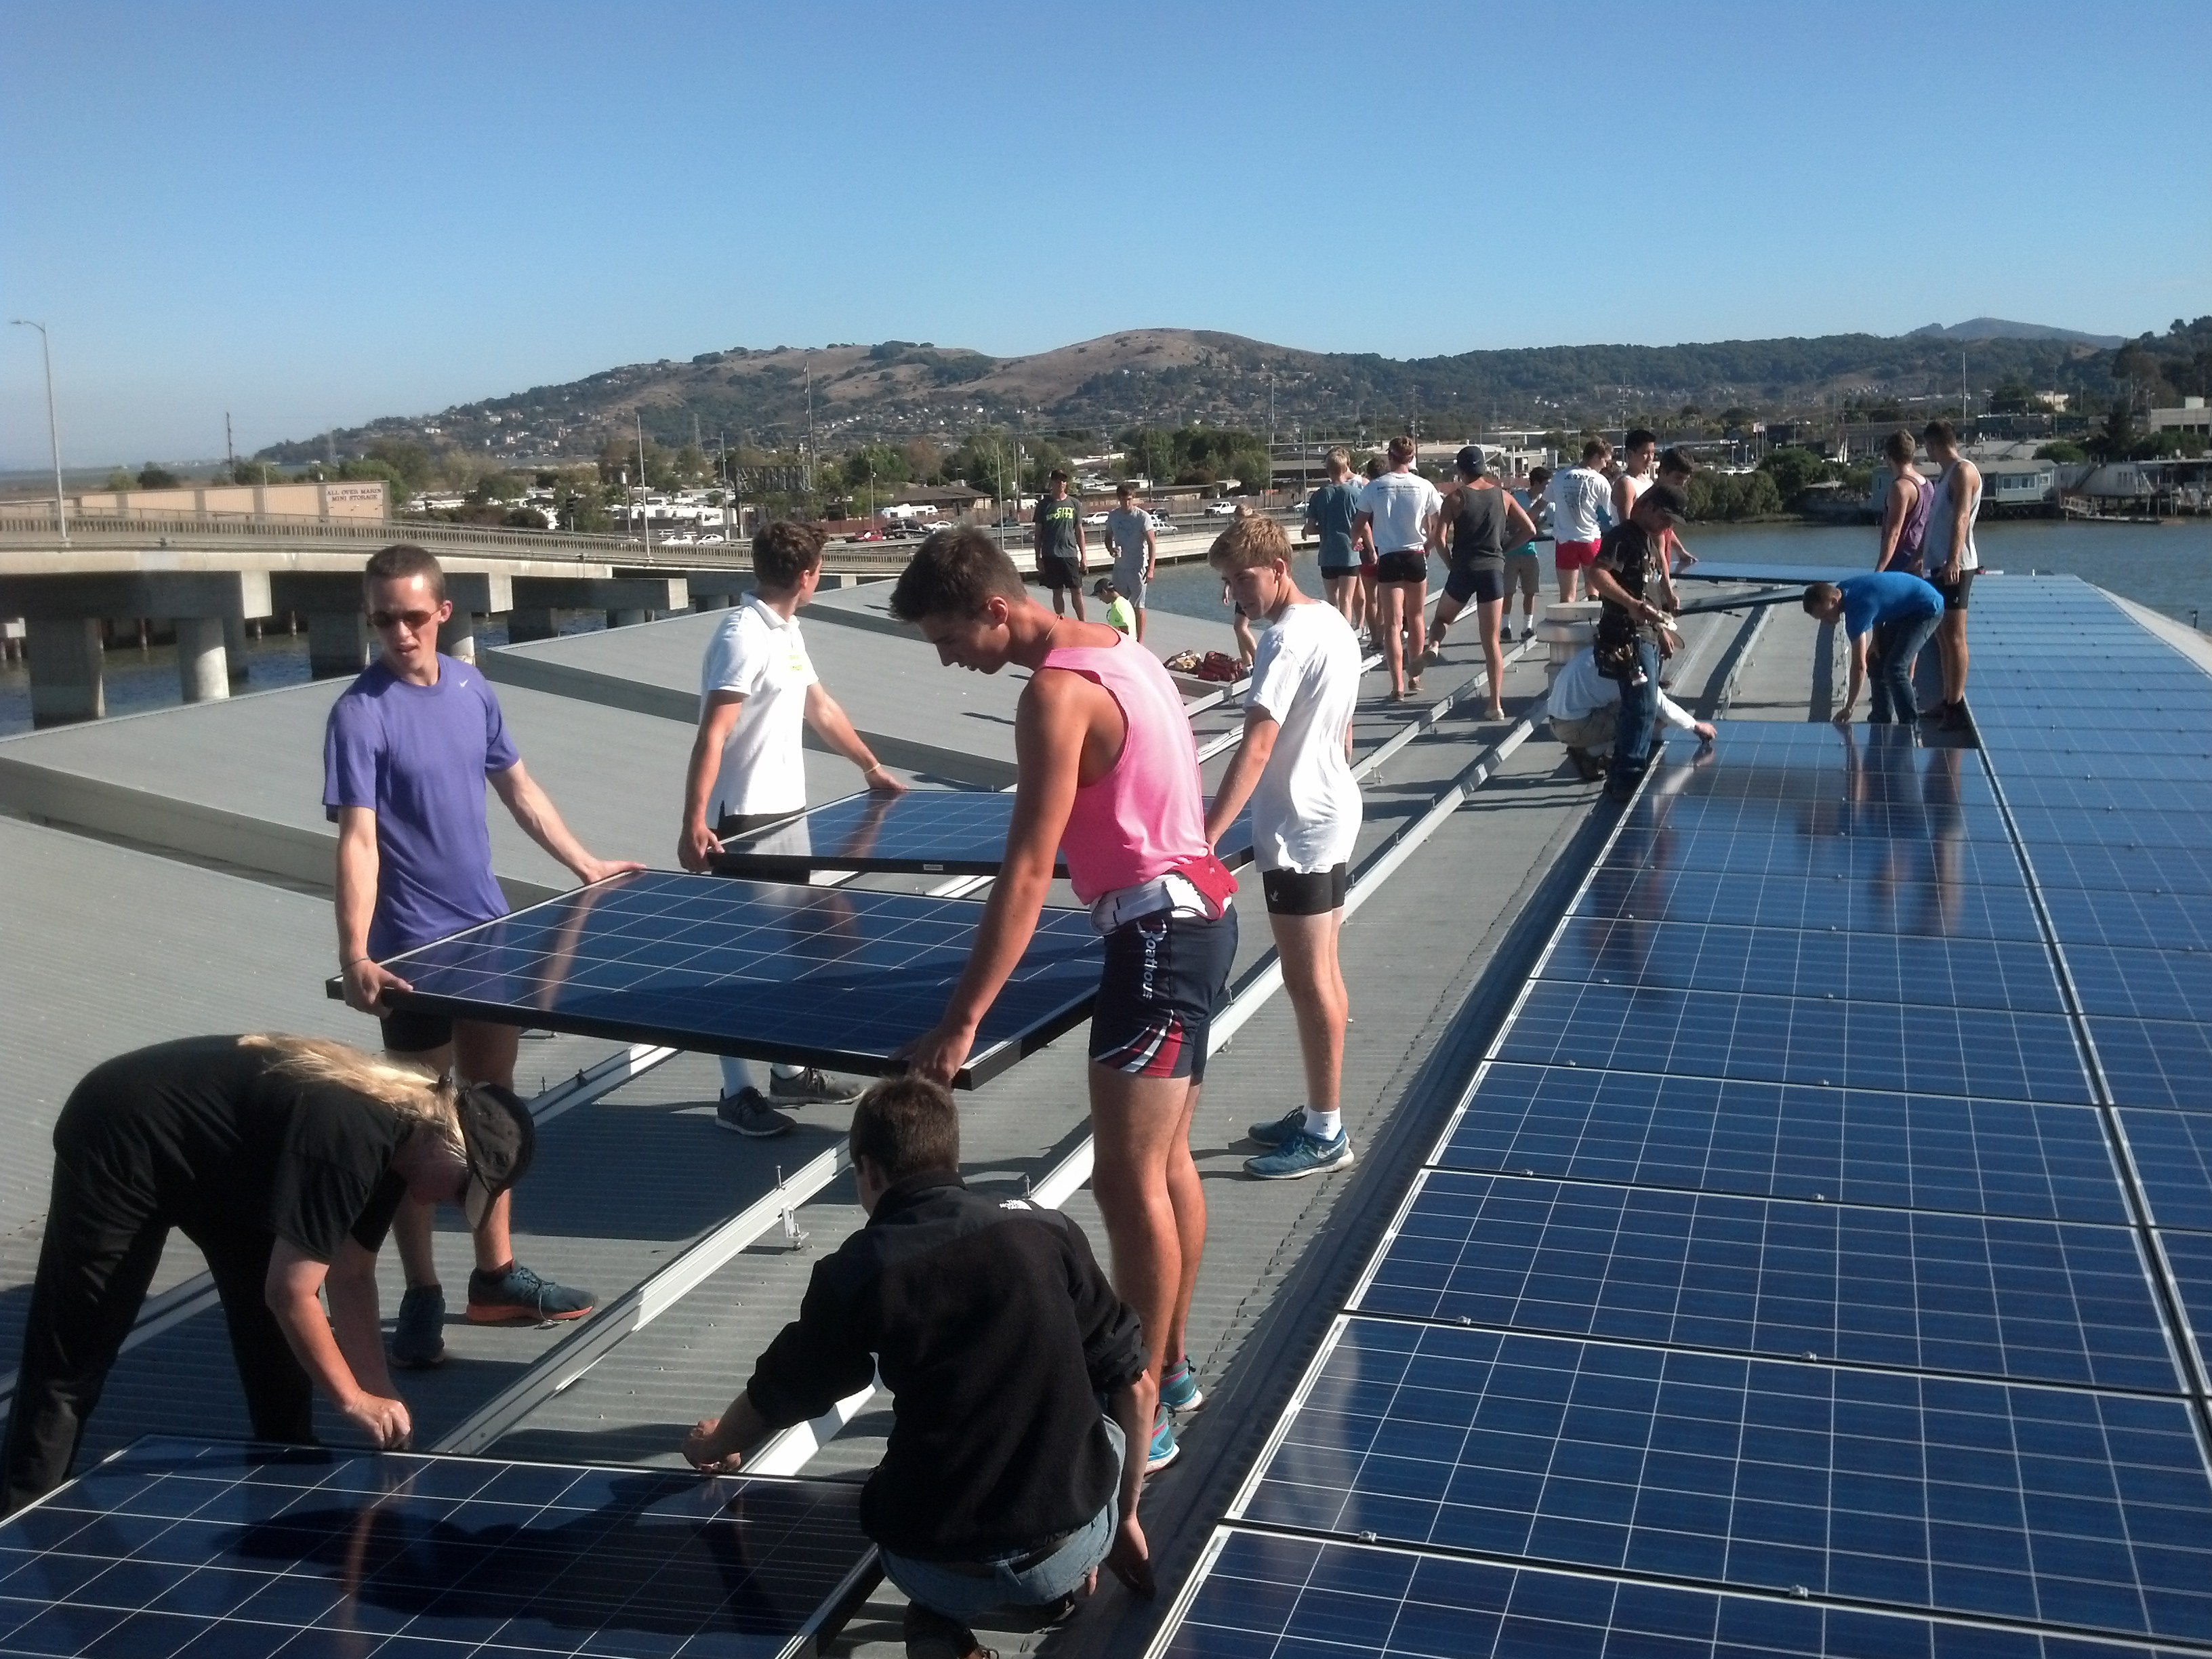 Installing solar panels at the Marin Rowing Association